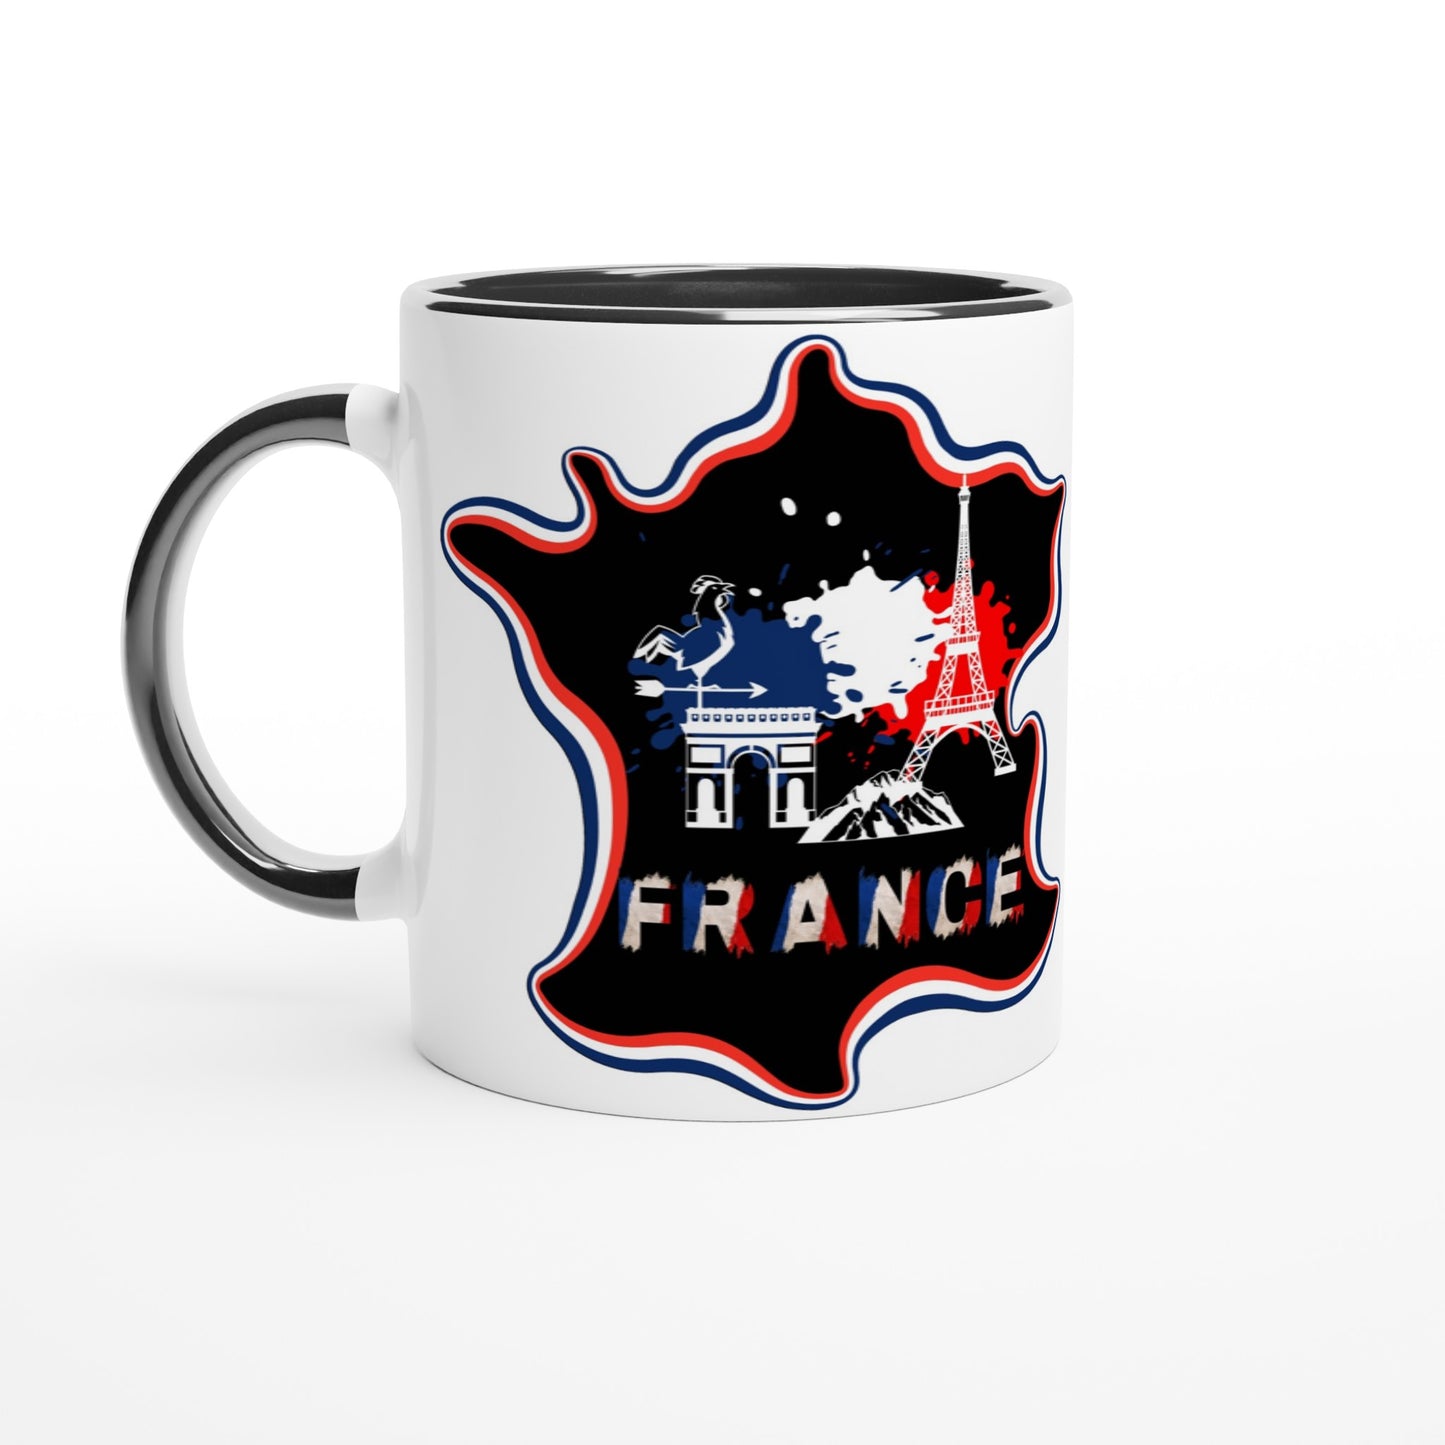 France Map White 11oz Ceramic Mug with Color Inside